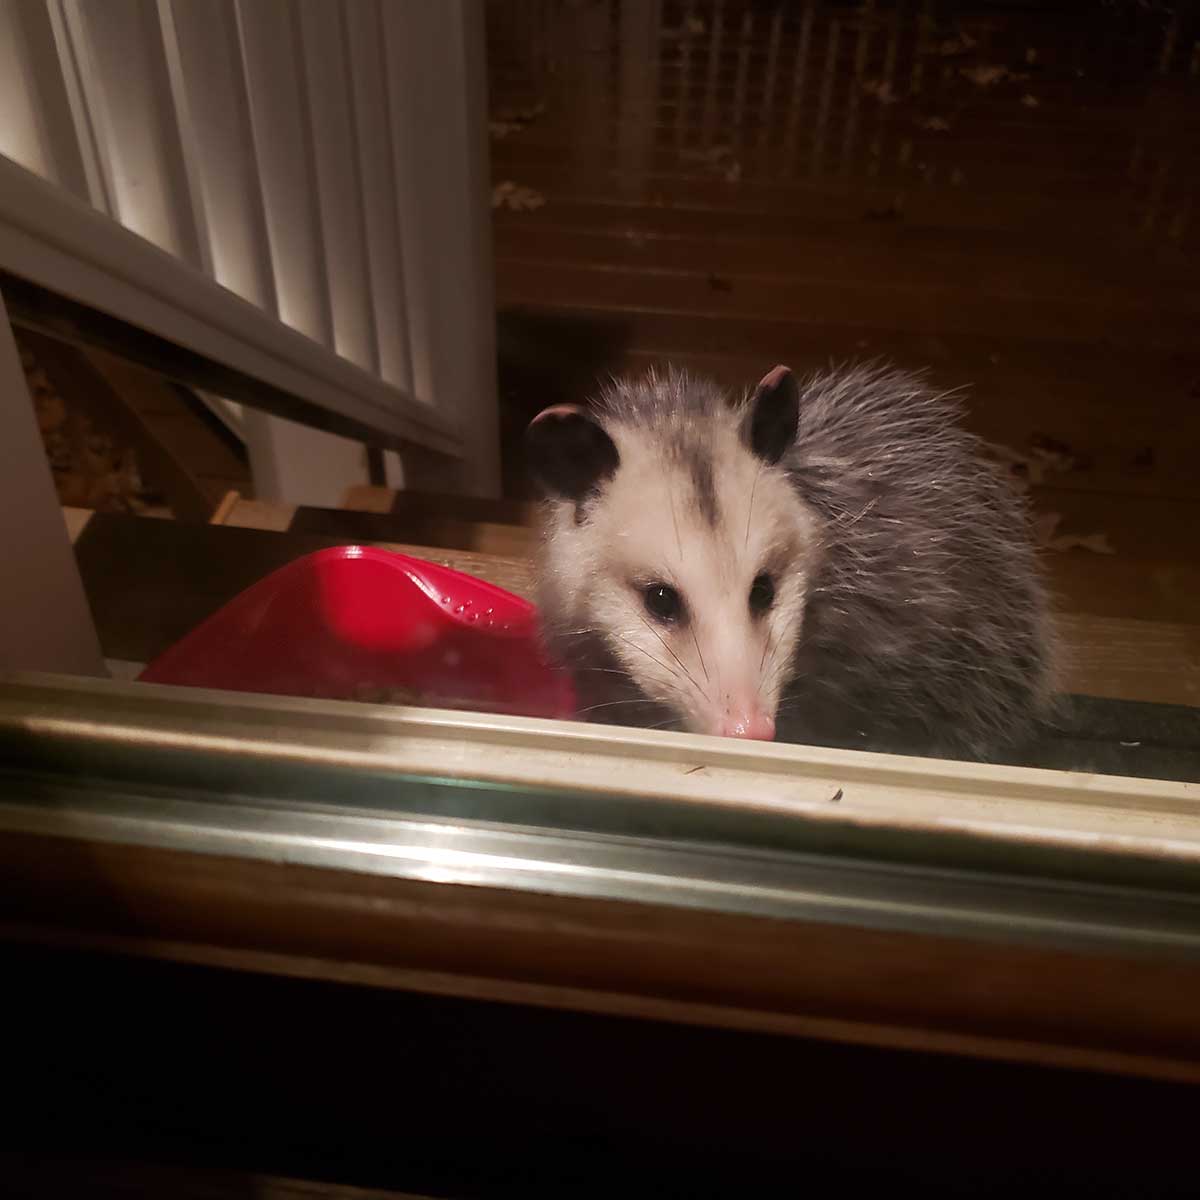 opossum eating cat food by the back door